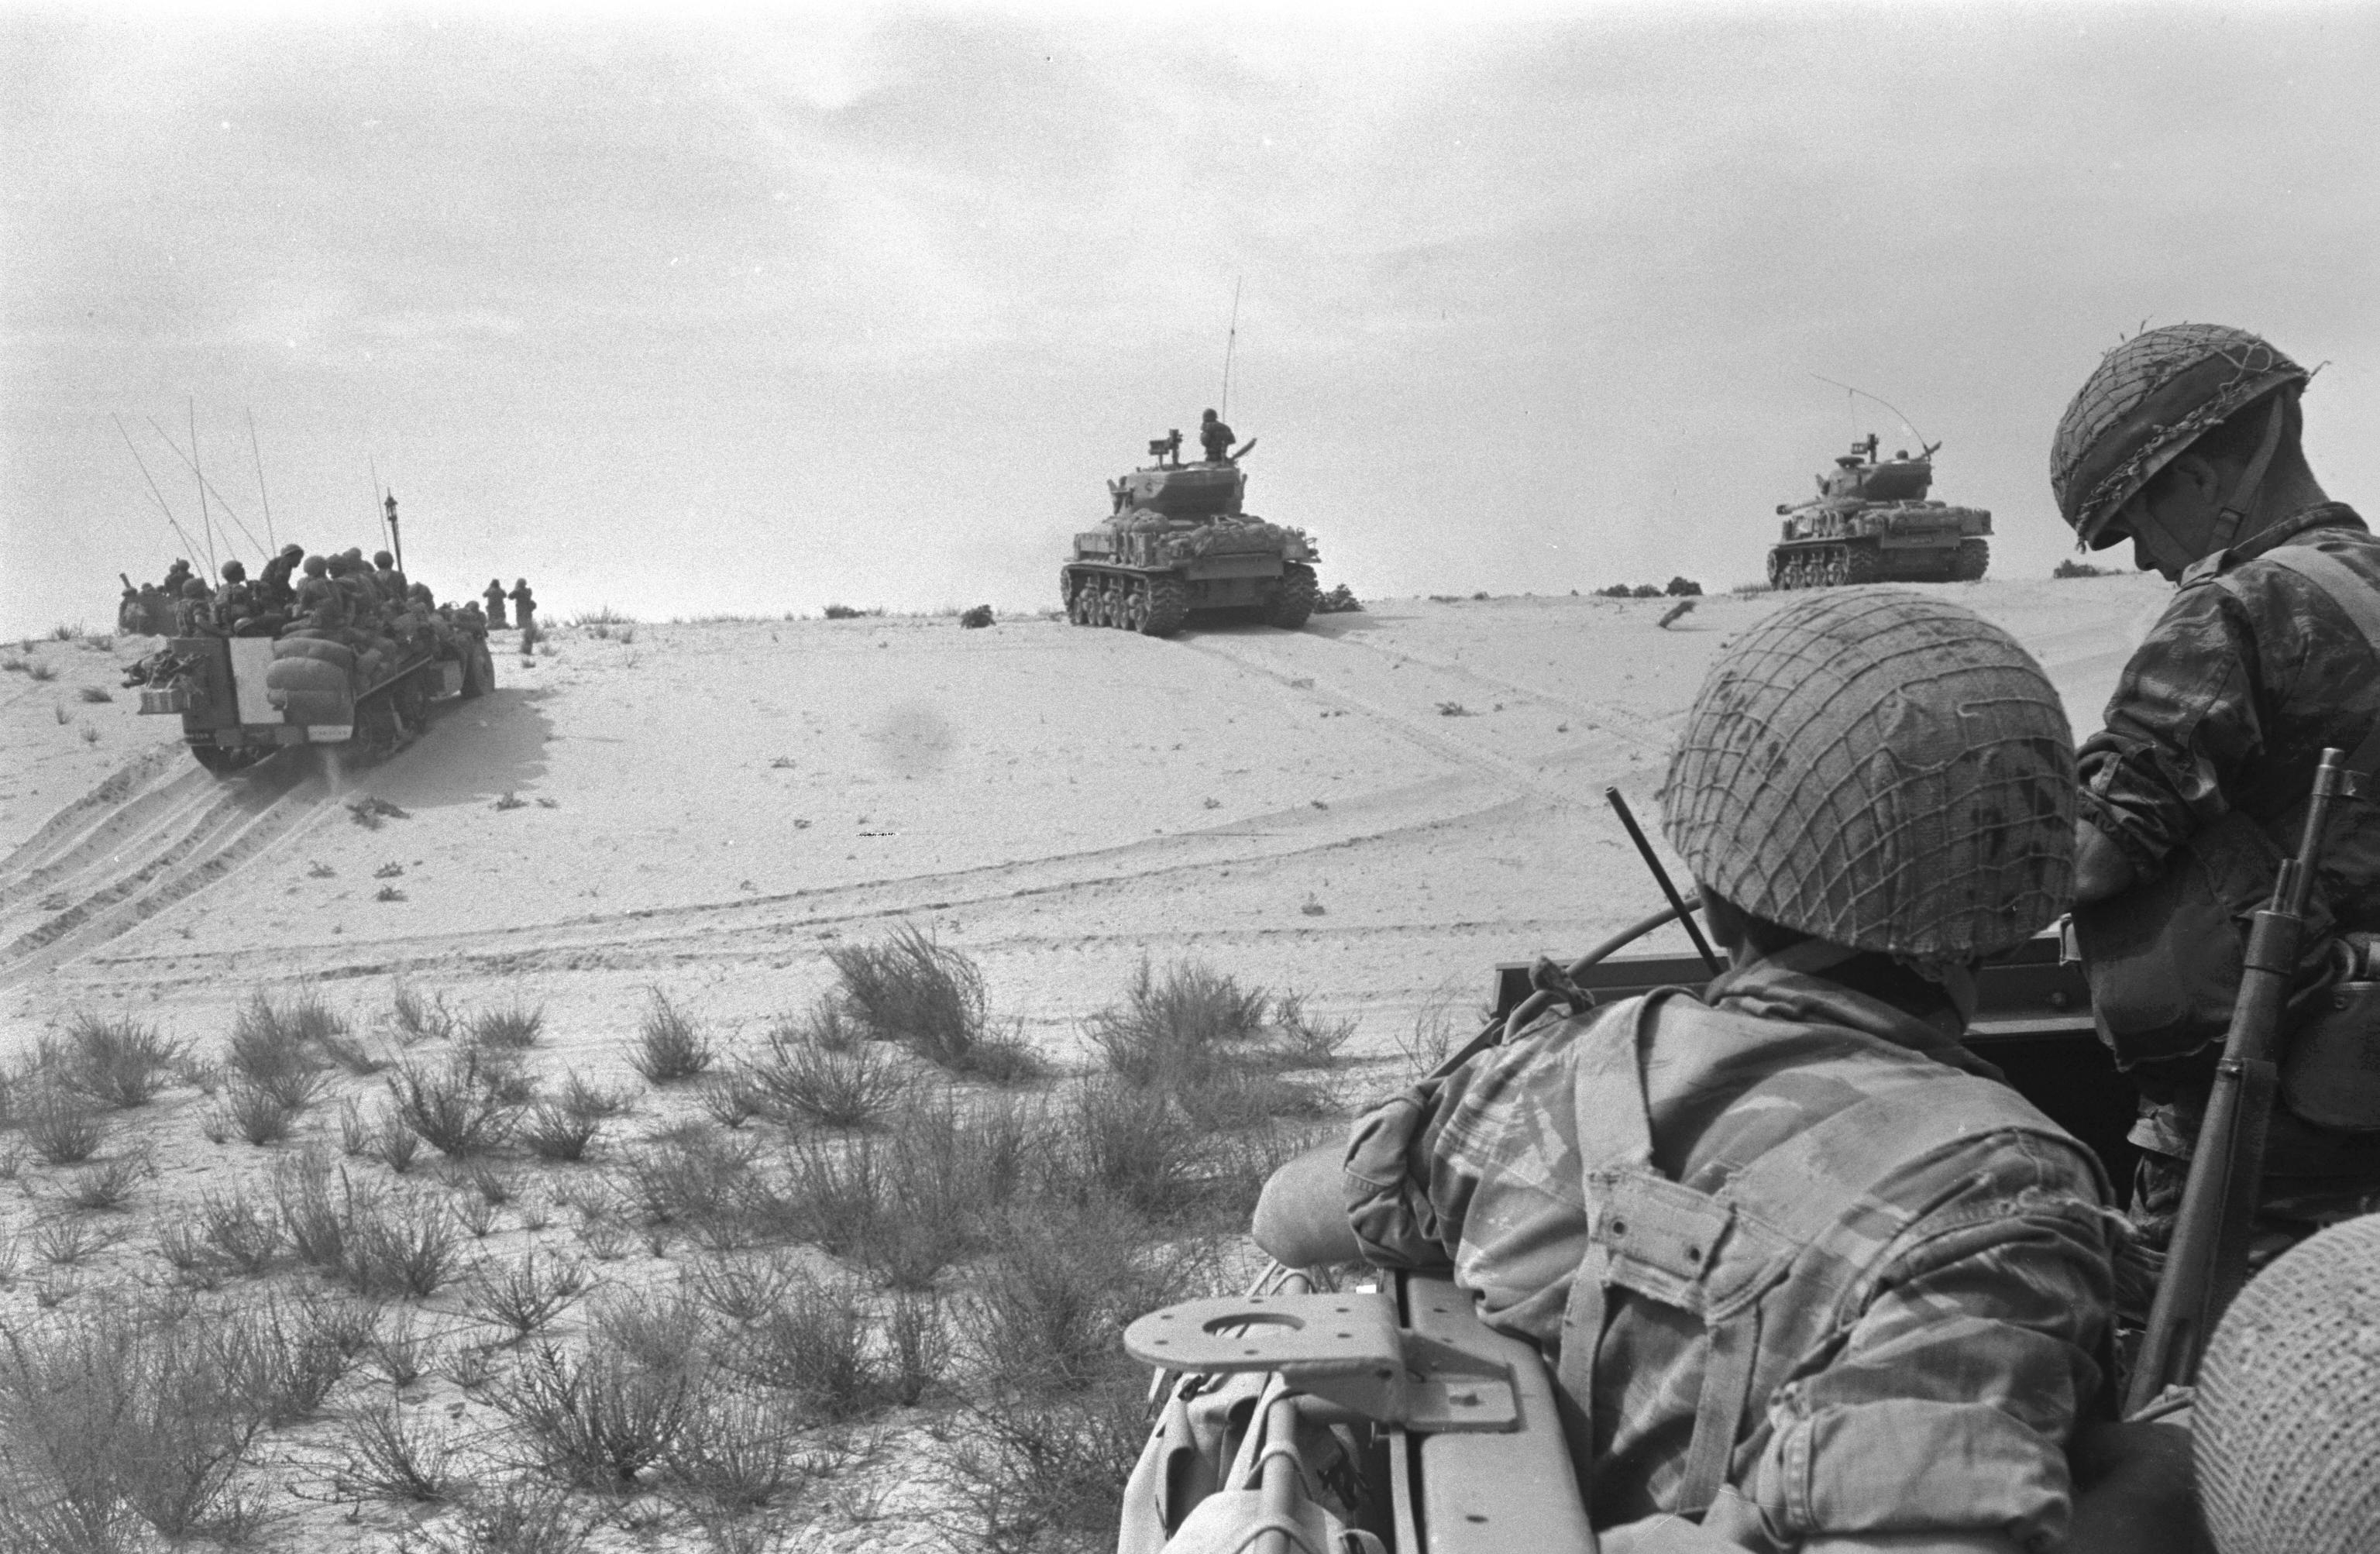 Израильская бронитехника готовится к бою на Синае.
Wikimedia